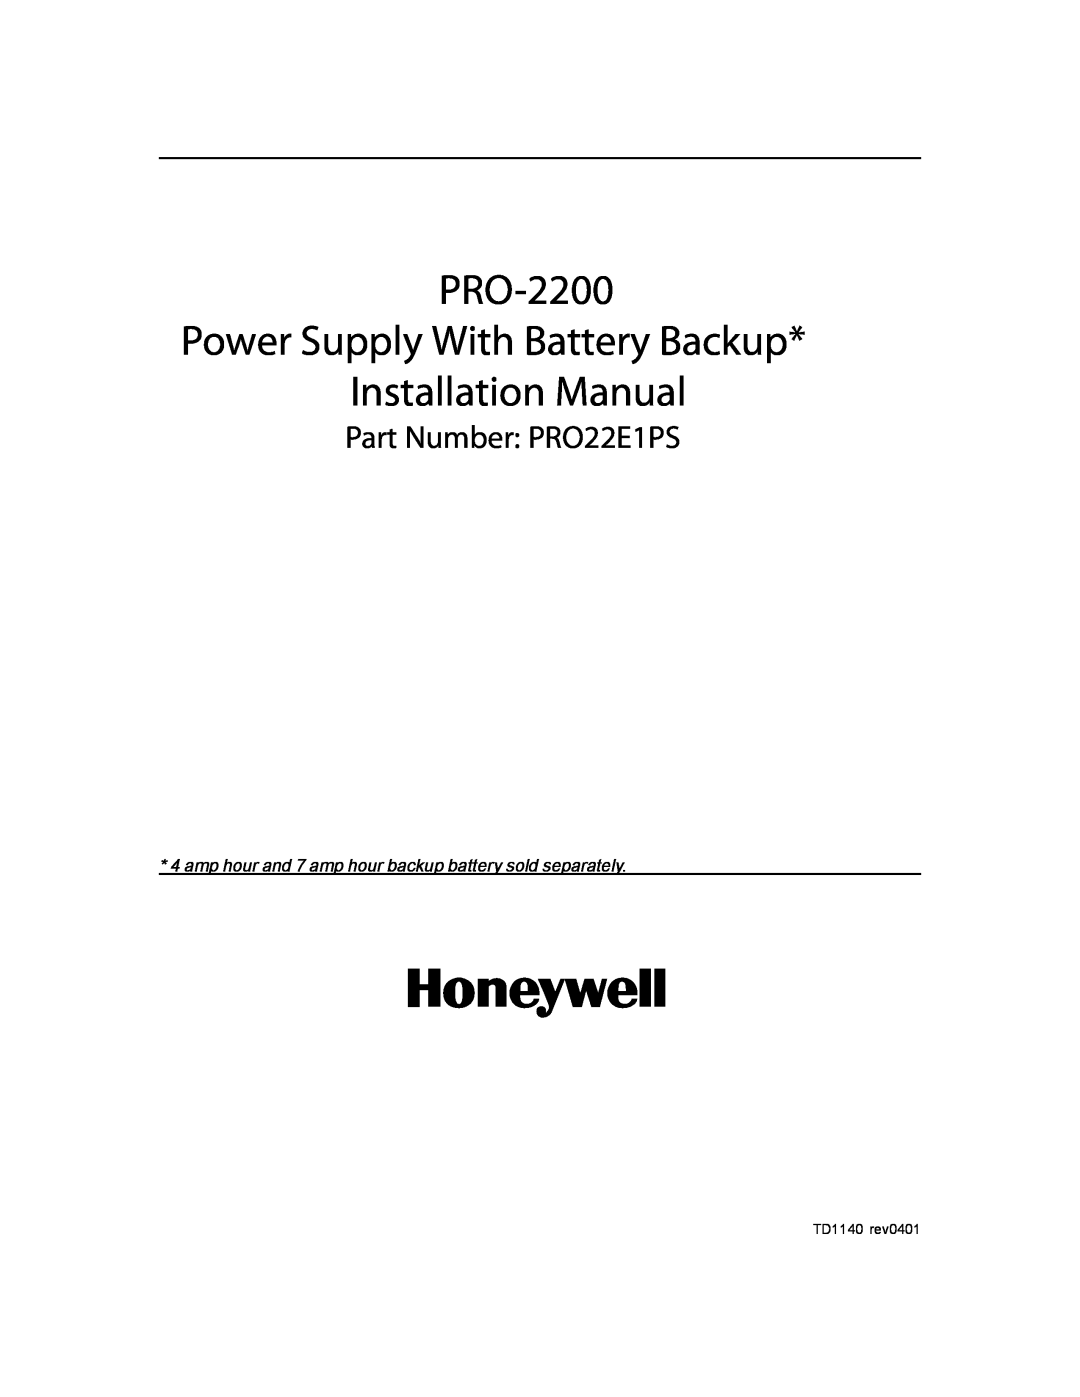 Honeywell manual Part Number PRO22EN, PRO-2200 Ethernet Board Installation Manual, TD1145 rev0601 